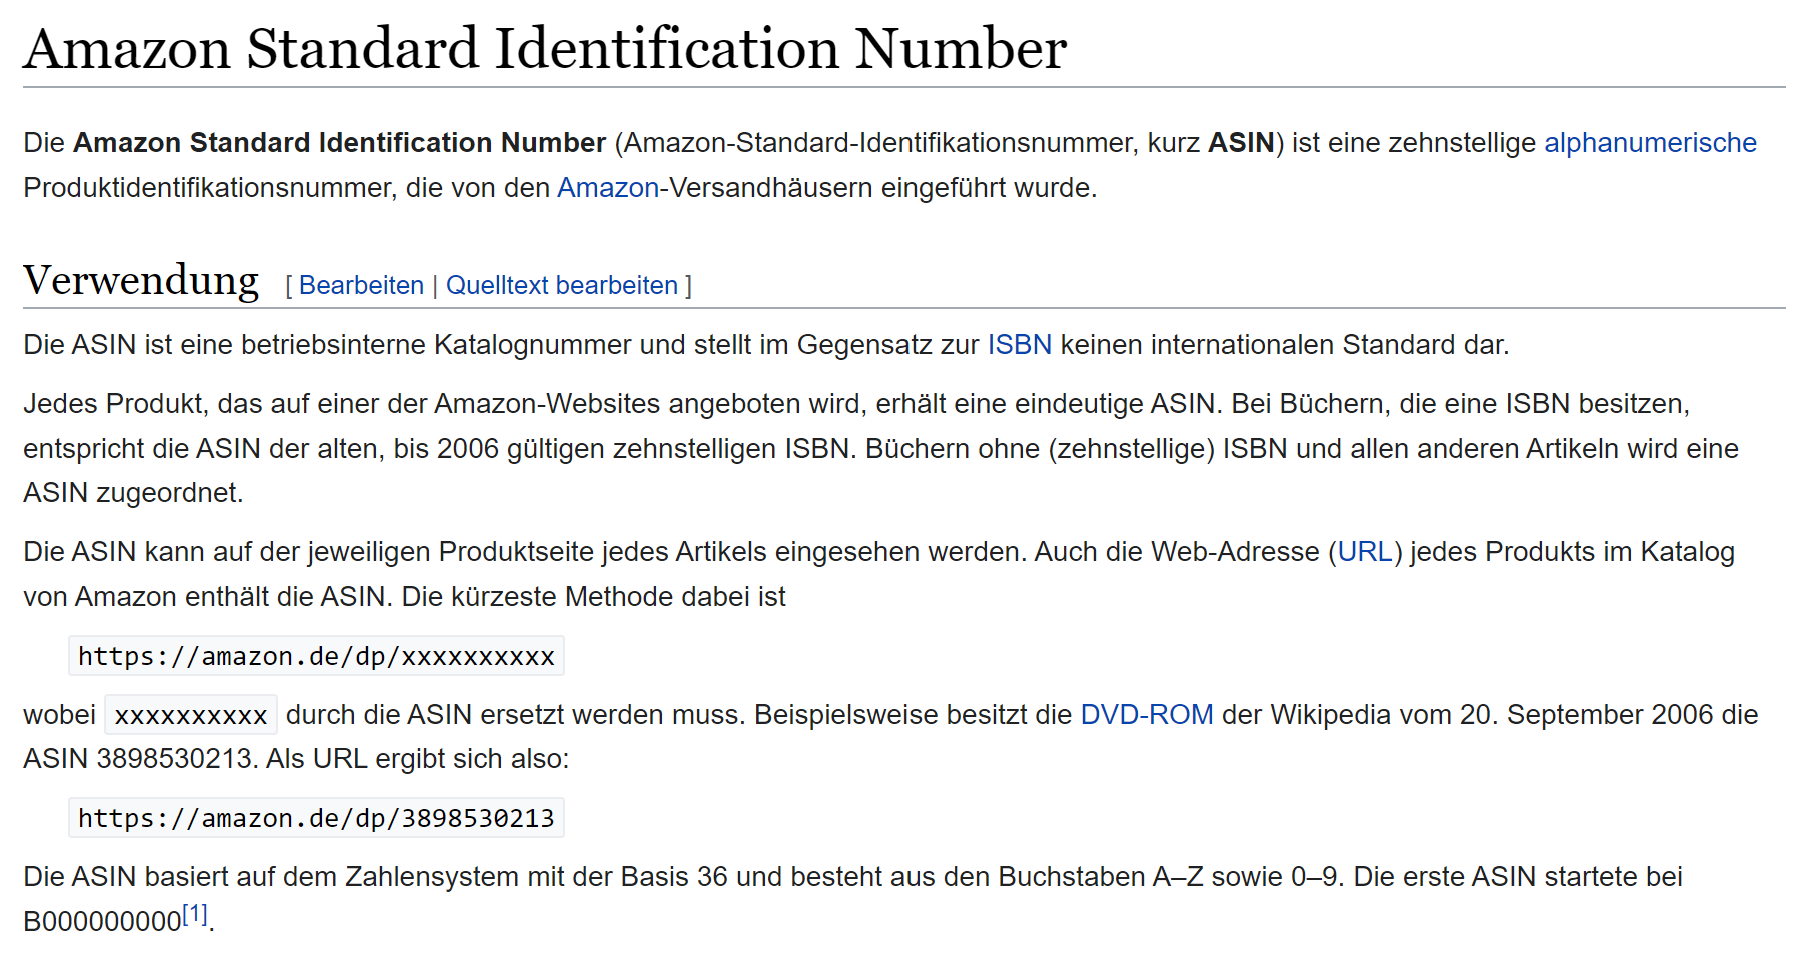 Amazon Standard Identification Number